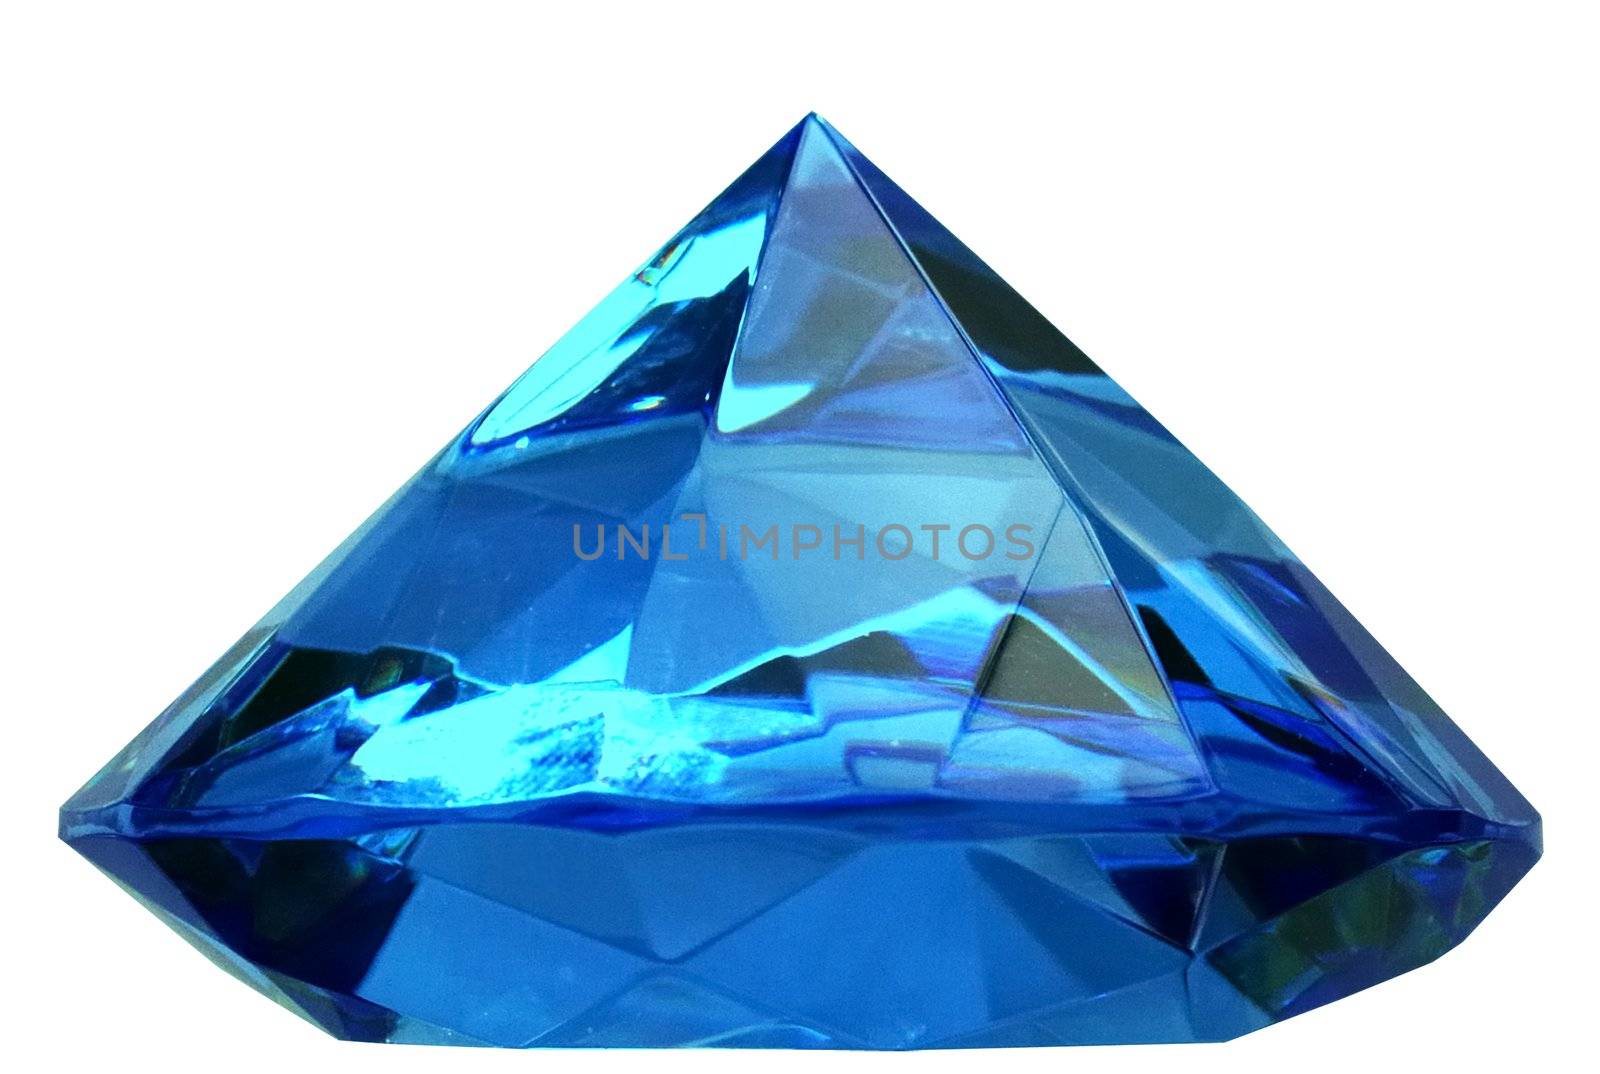 a magic blue pyramid is a crystal, radiative power